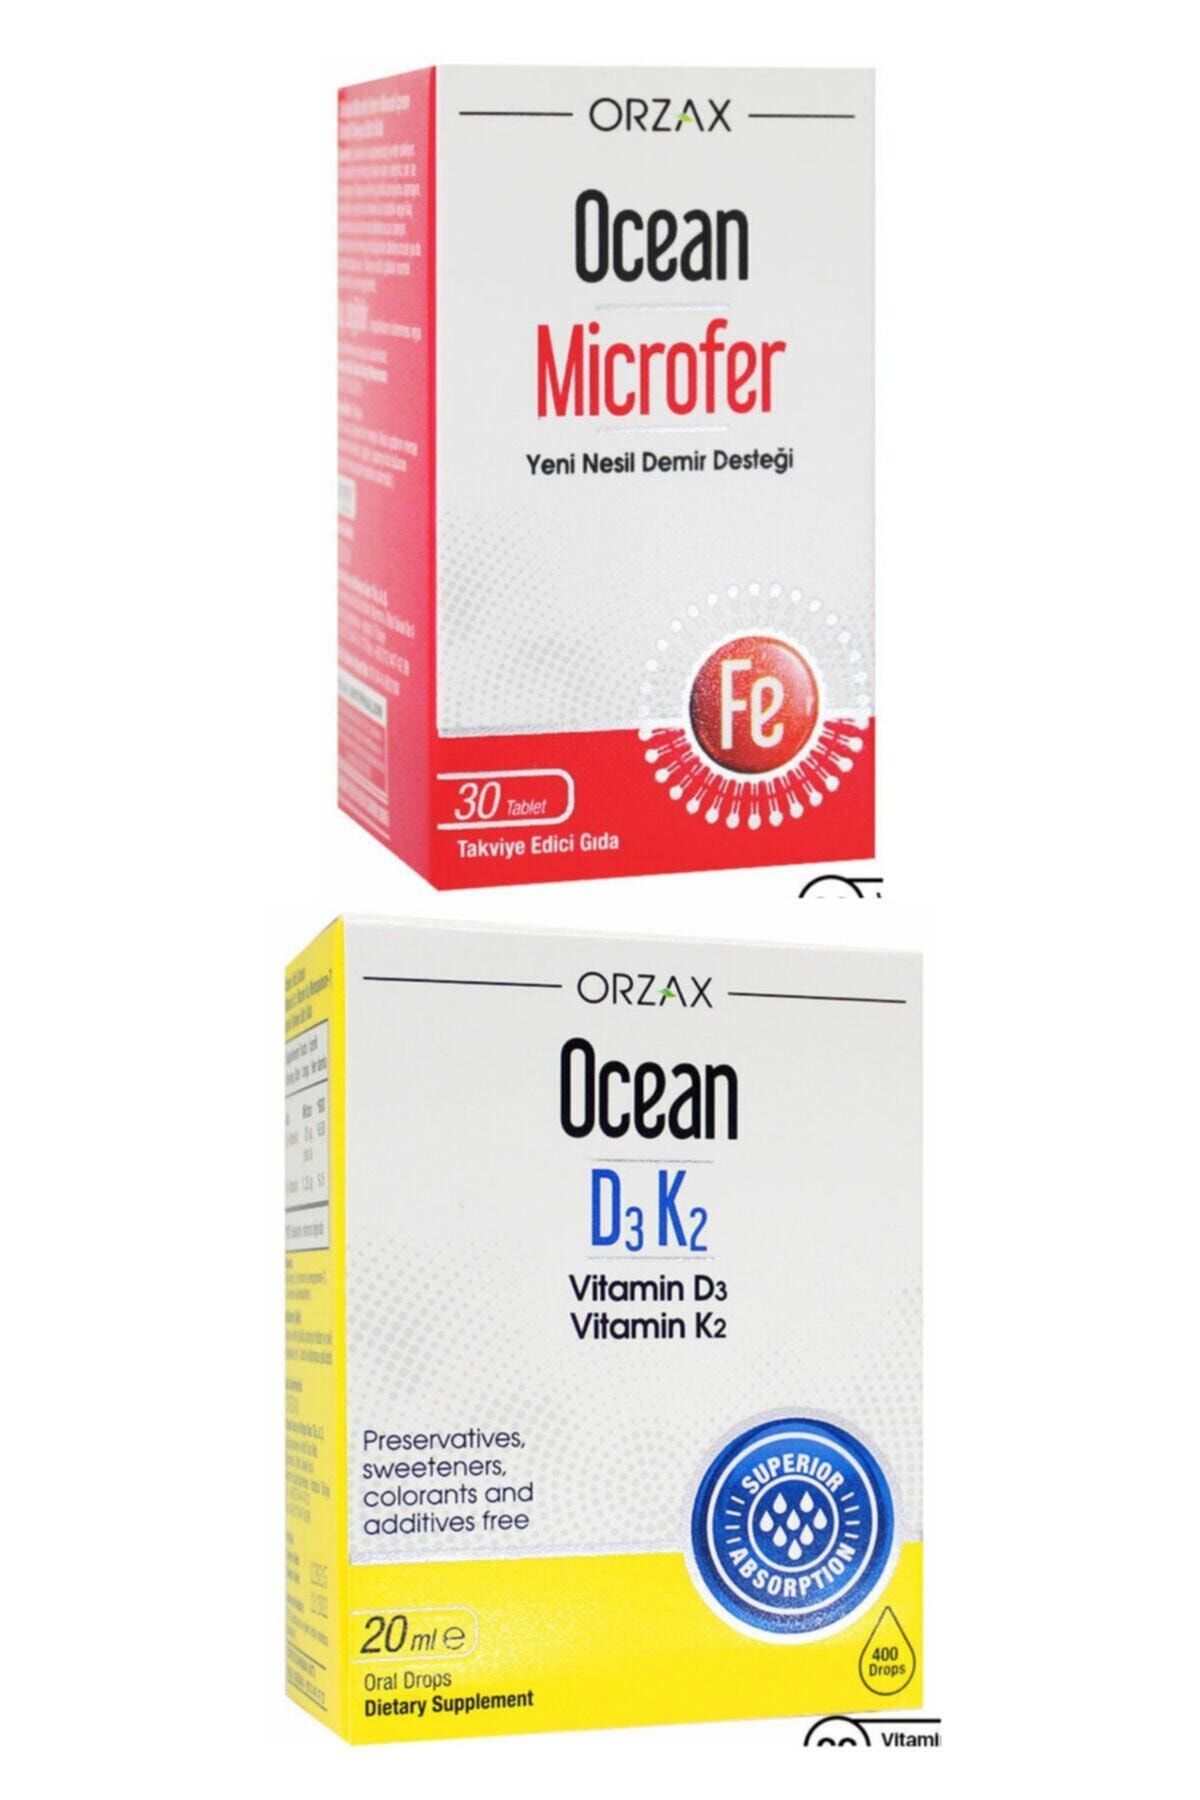 Ocean Microfer 30 Tablet + Ocean Vitamin D3k2 Damla 20 ml